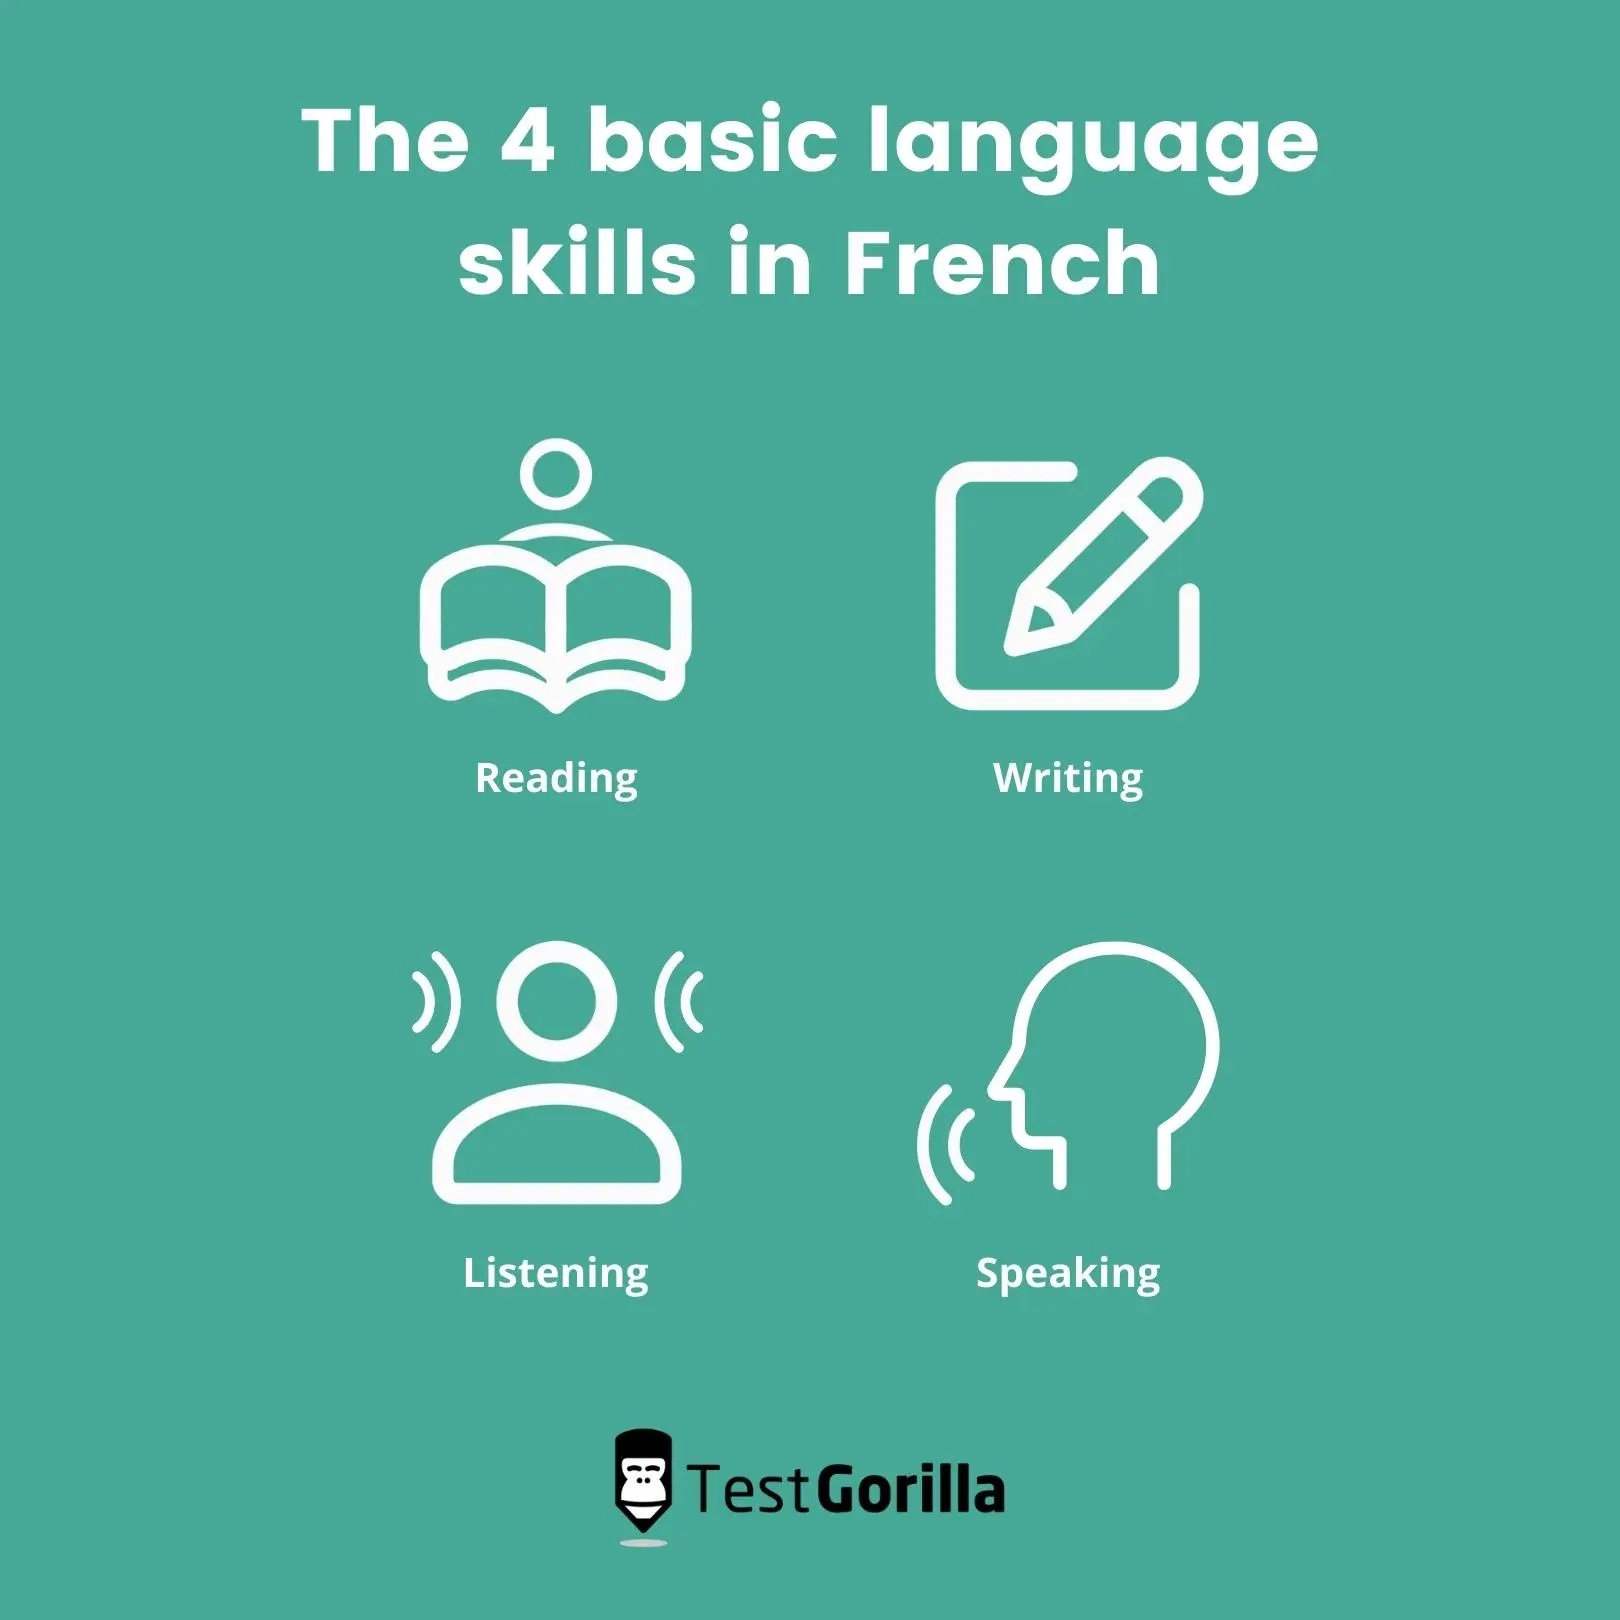 image showing the 4 basic language skills in French 